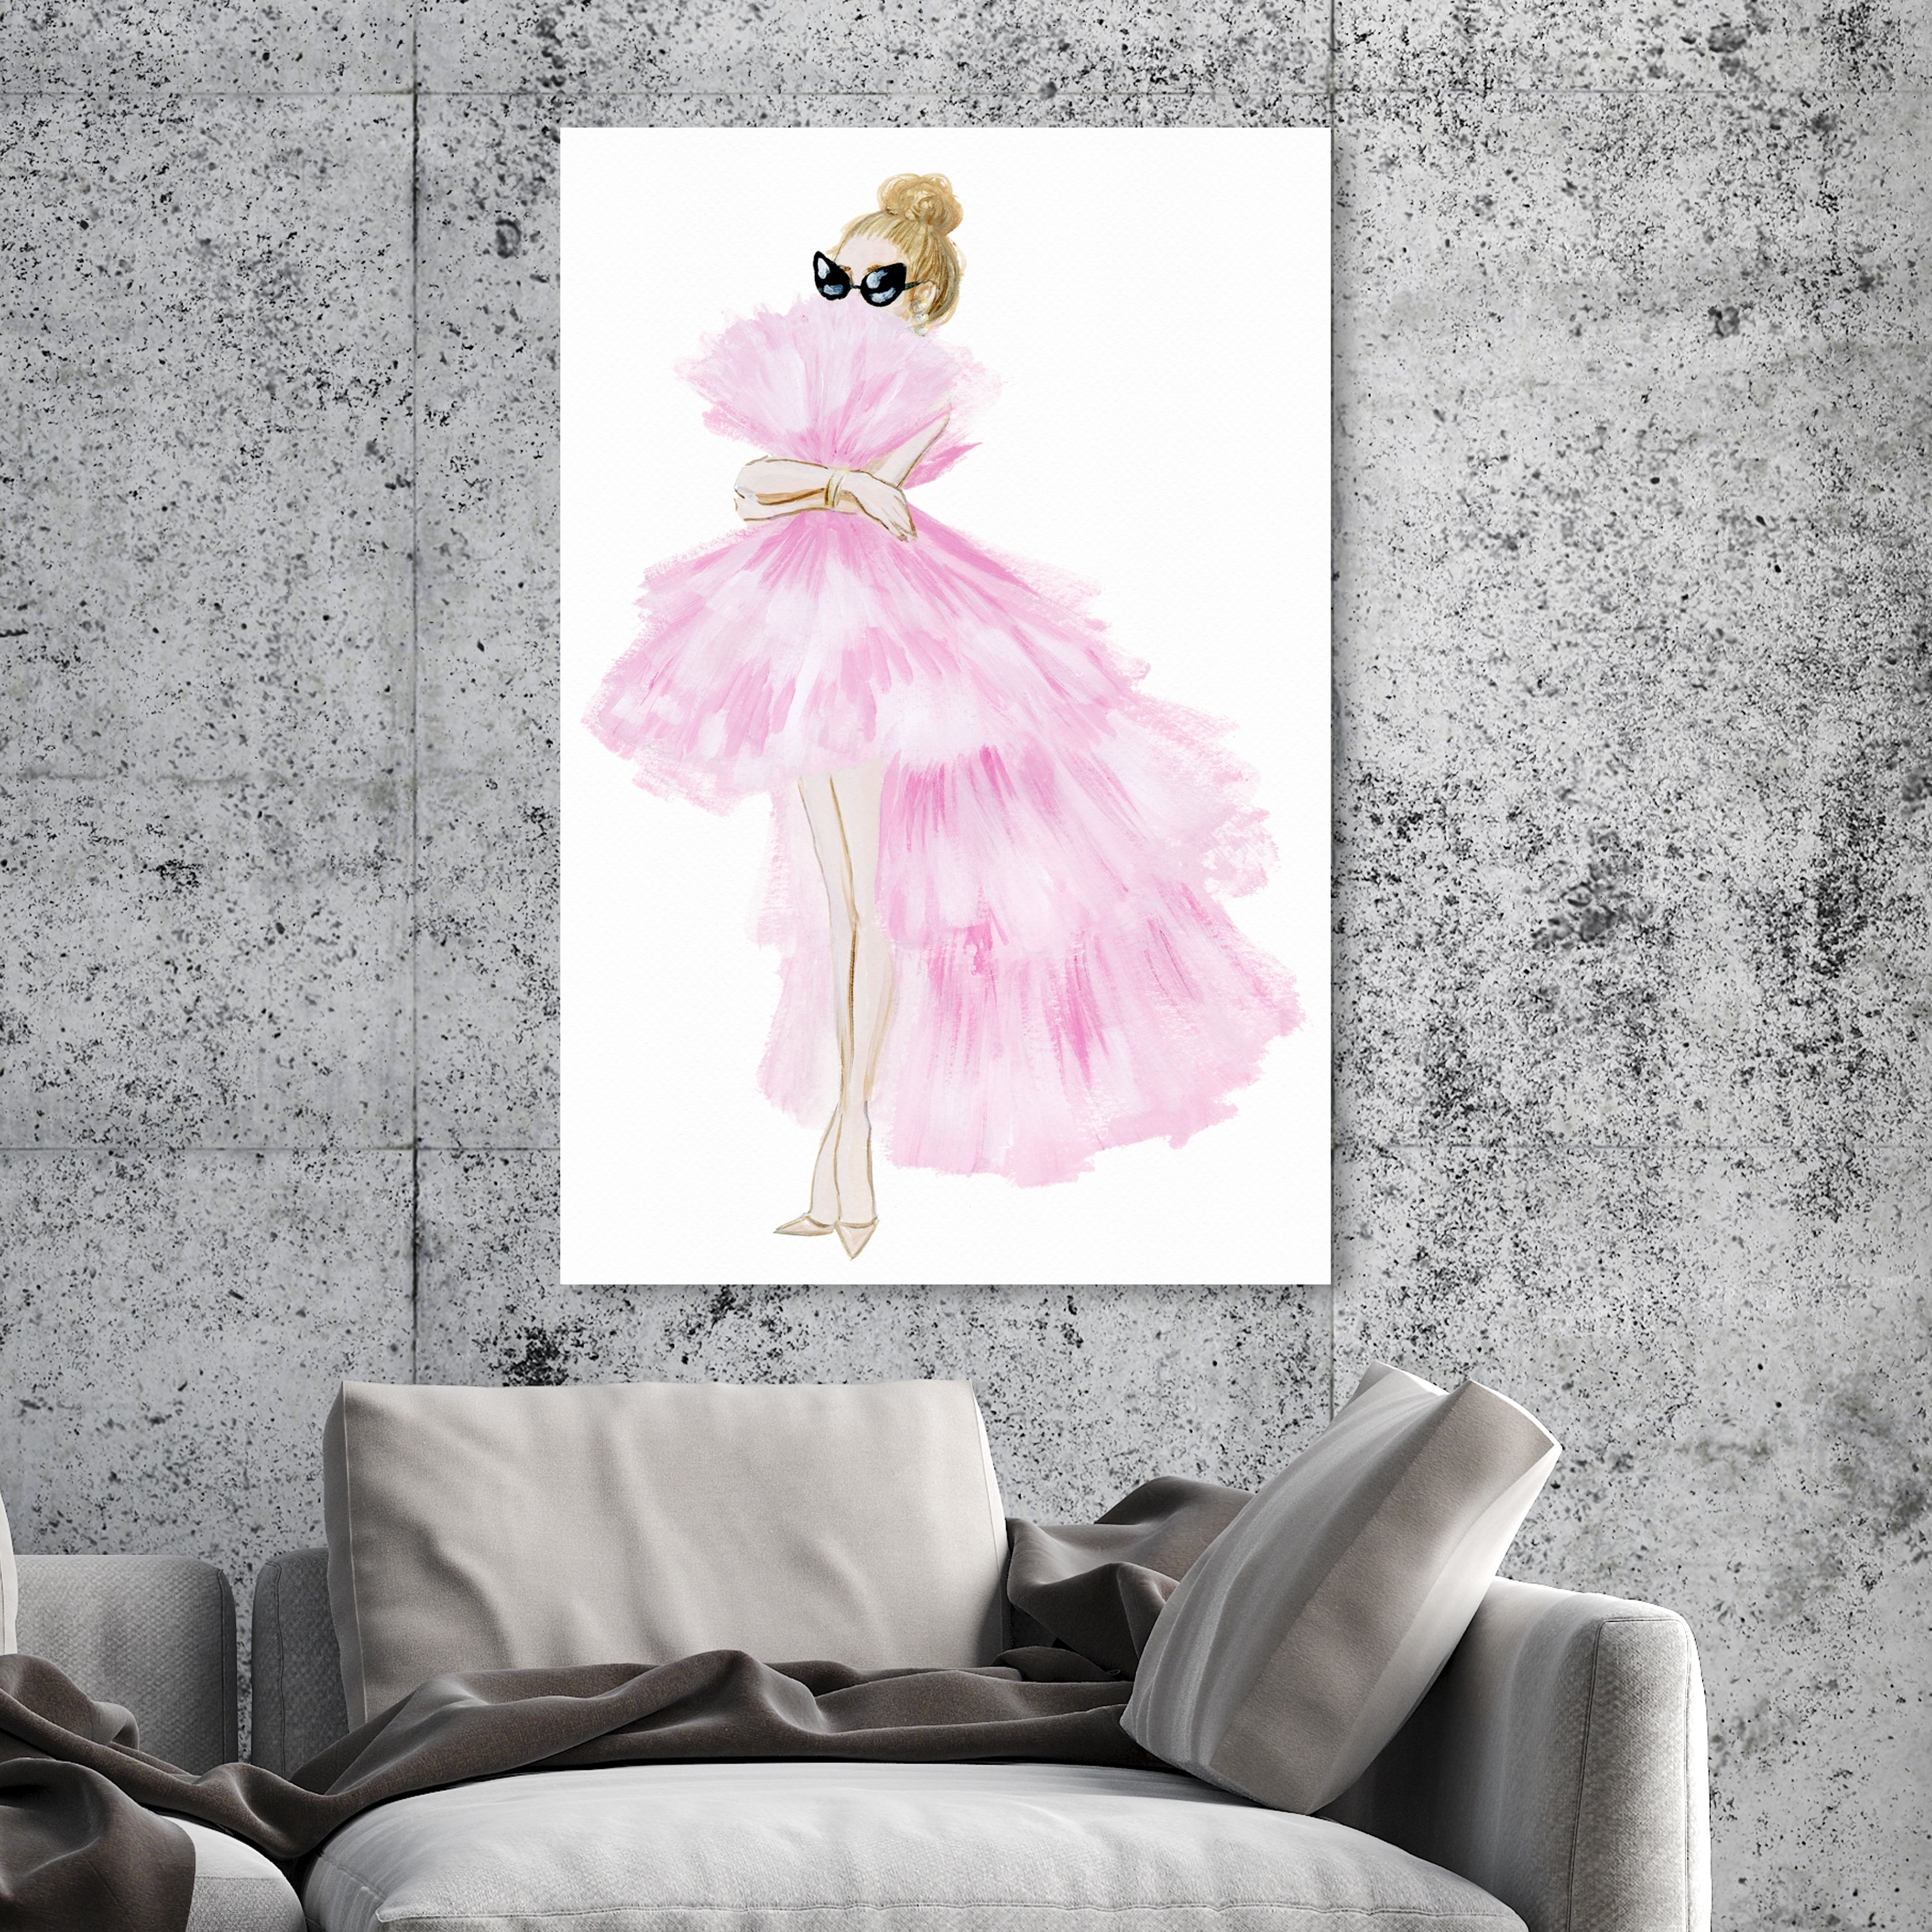 Oliver Gal 'Pink Tutu Dress' Fashion and Glam Wall Art Canvas